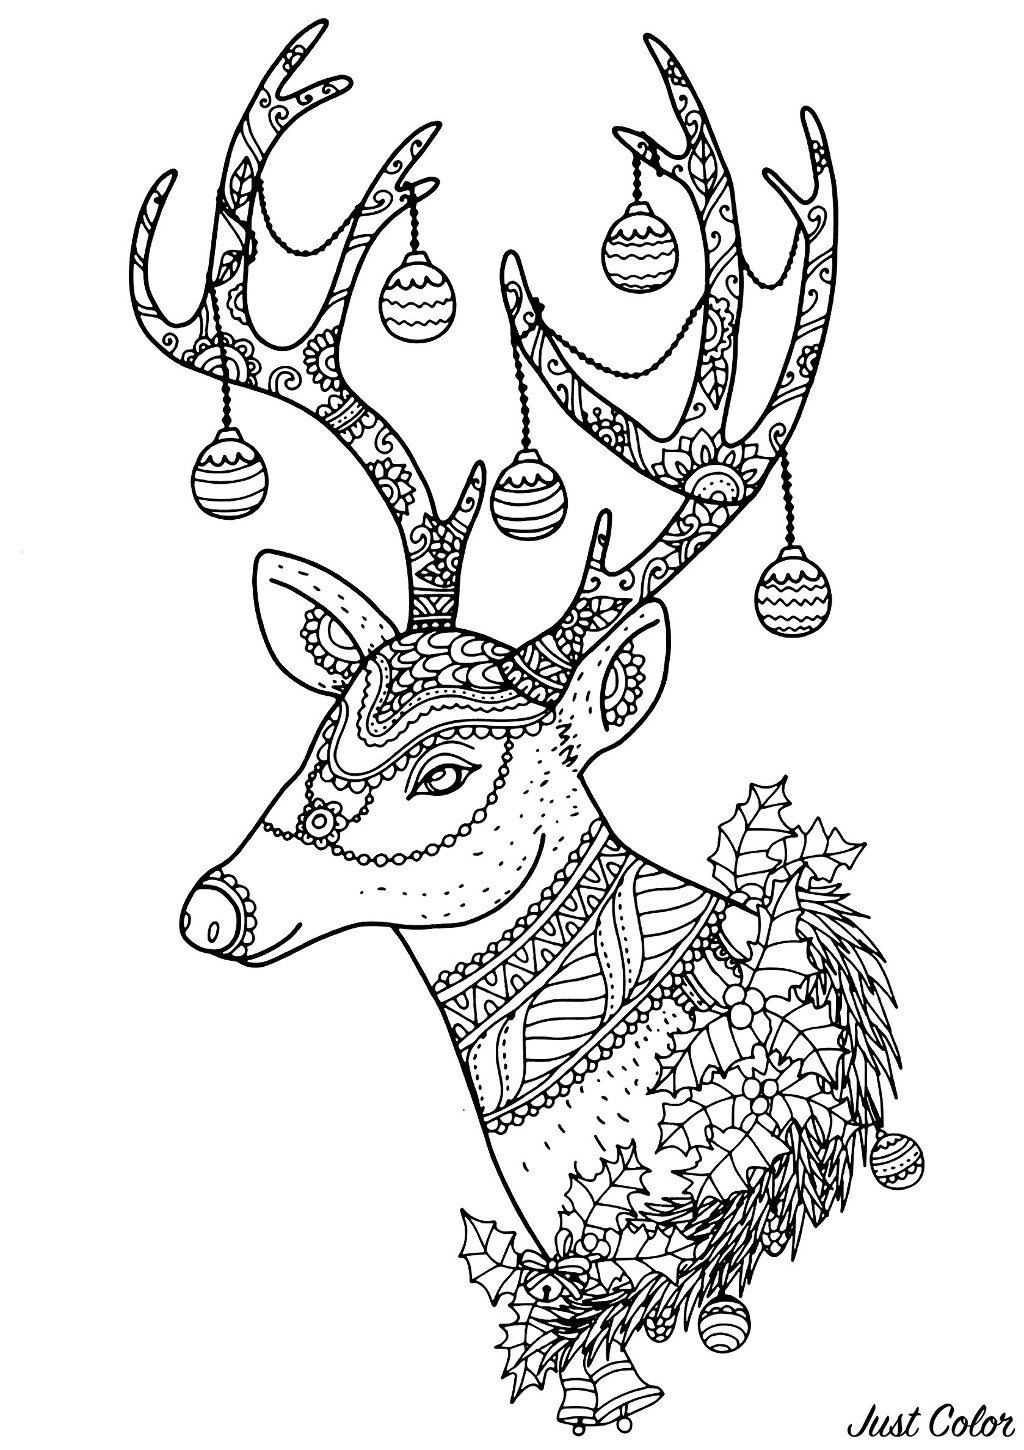 Christmas reindeer nontachai hengtragool - Christmas Adult Coloring Pages